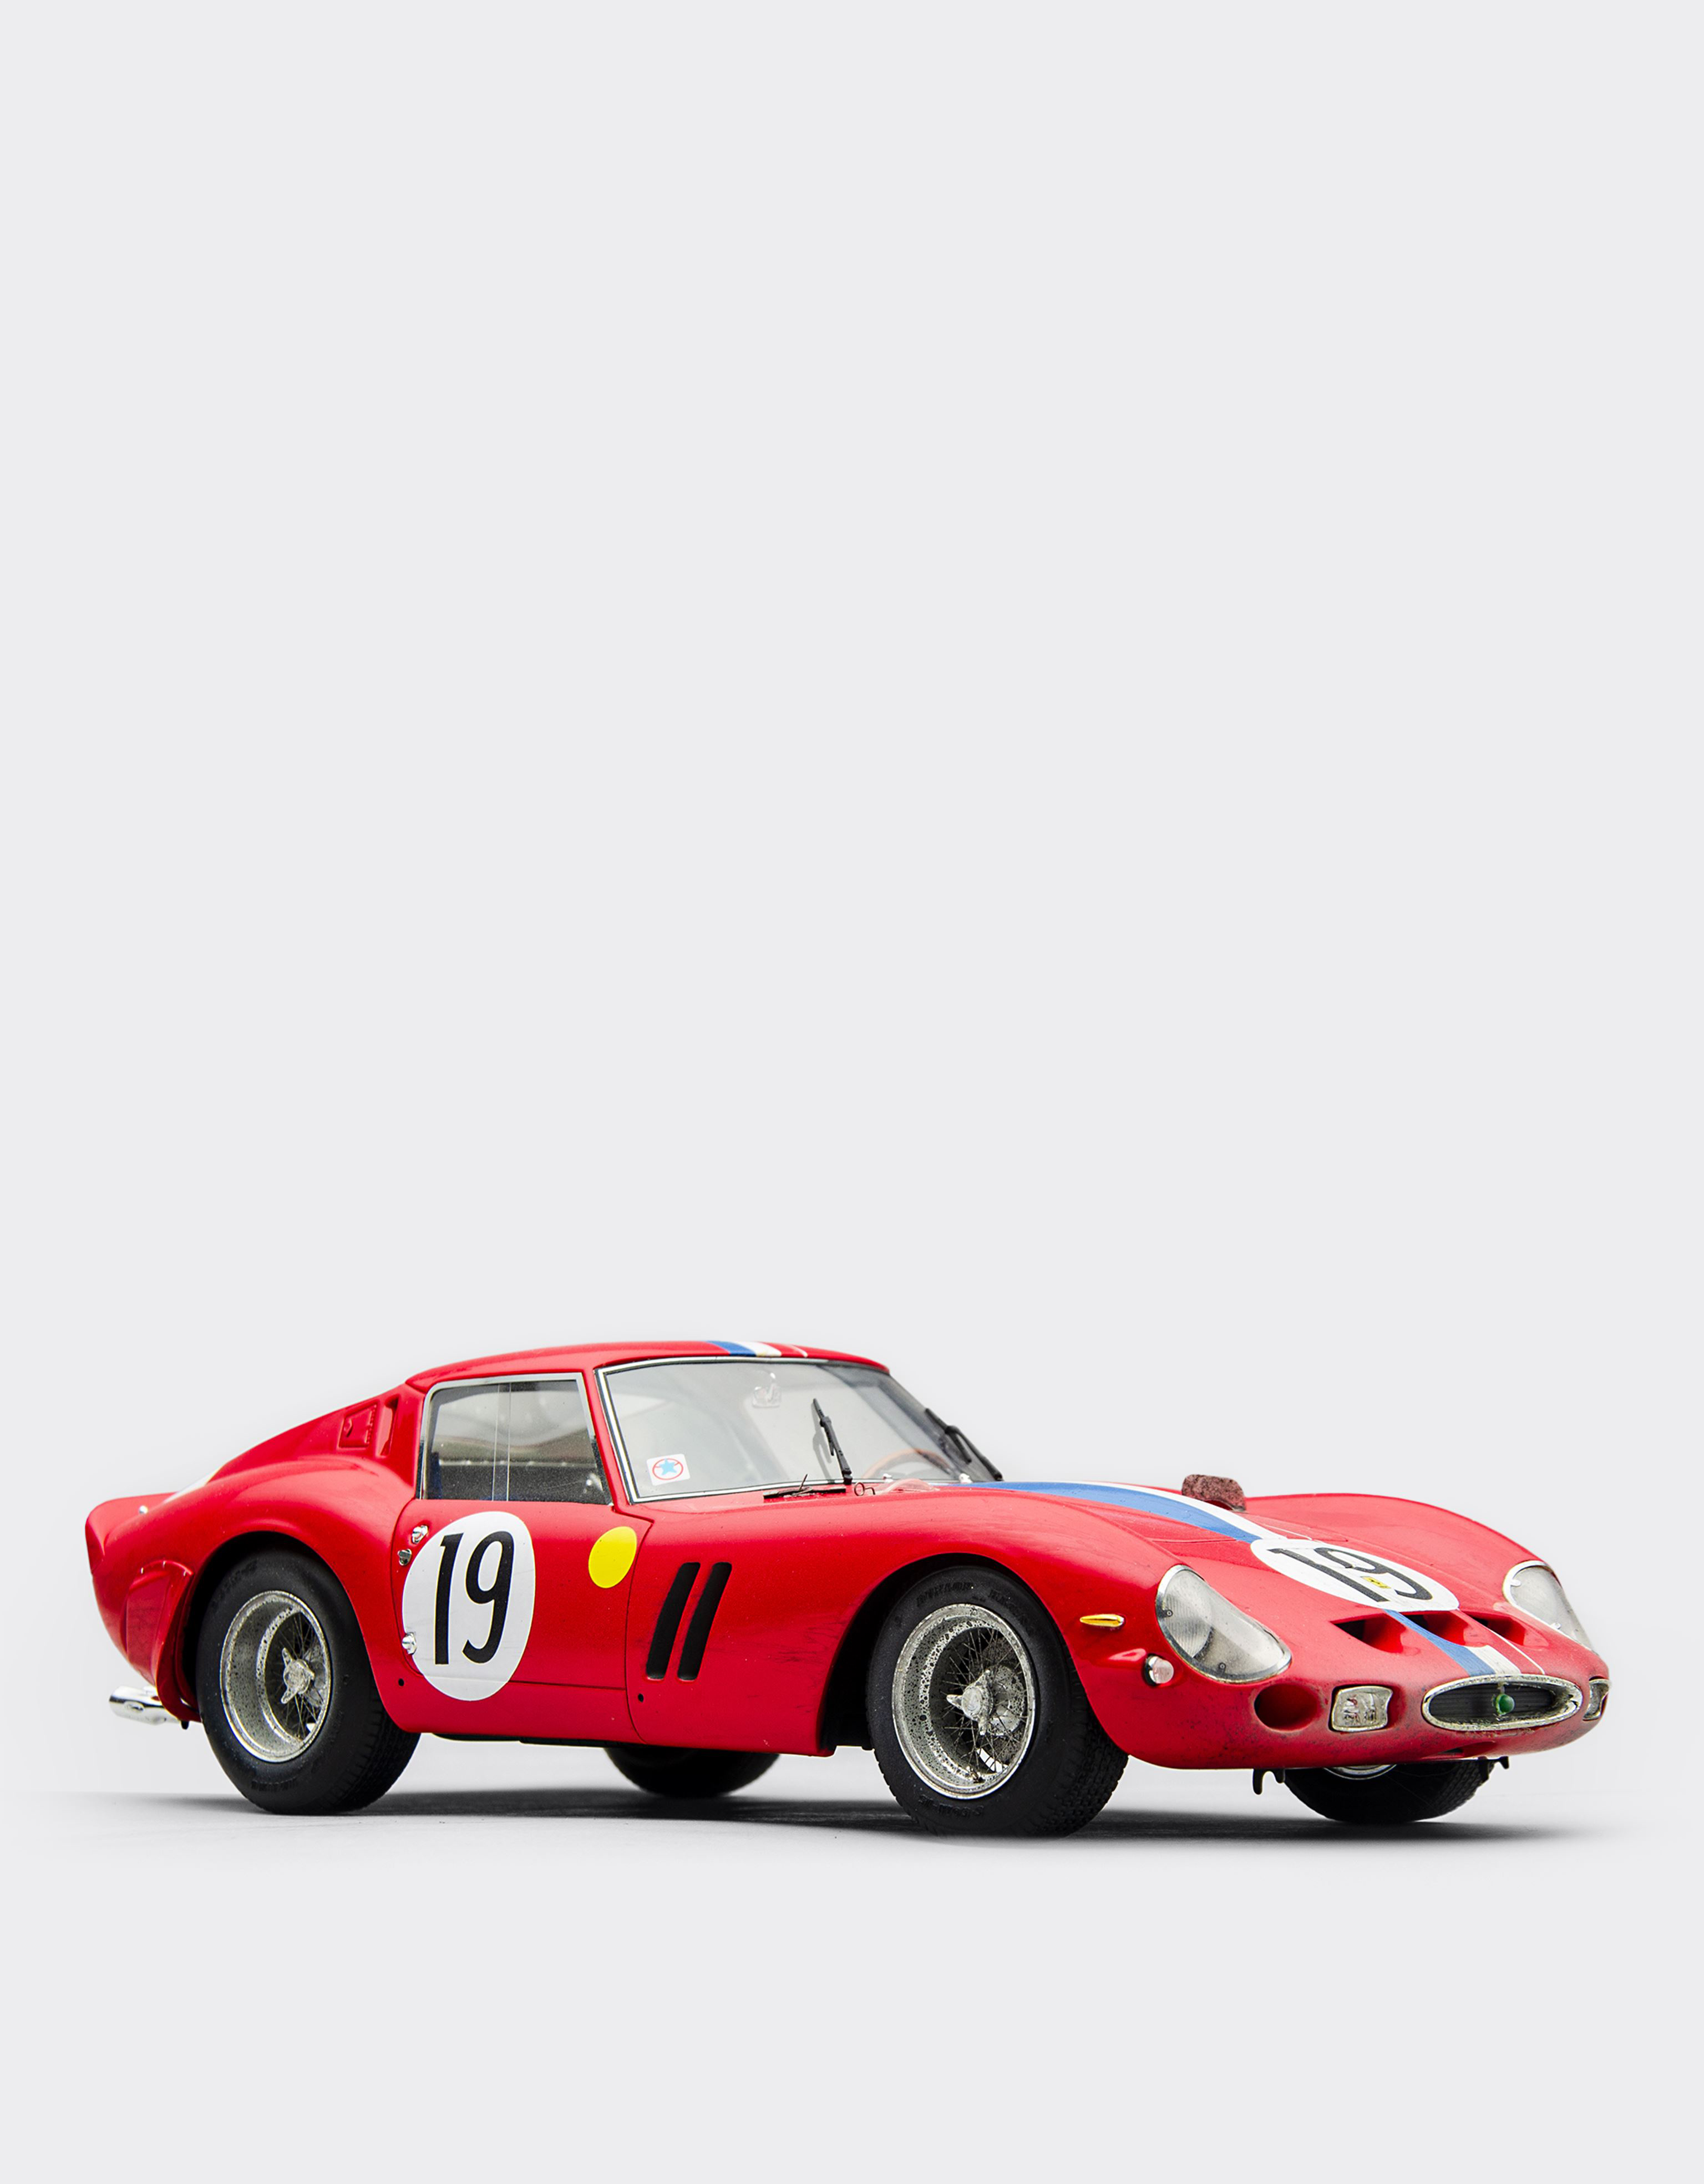 Ferrari 250 GTO 1962 Le Mans model in 1:18 scale in Red | Ferrari®